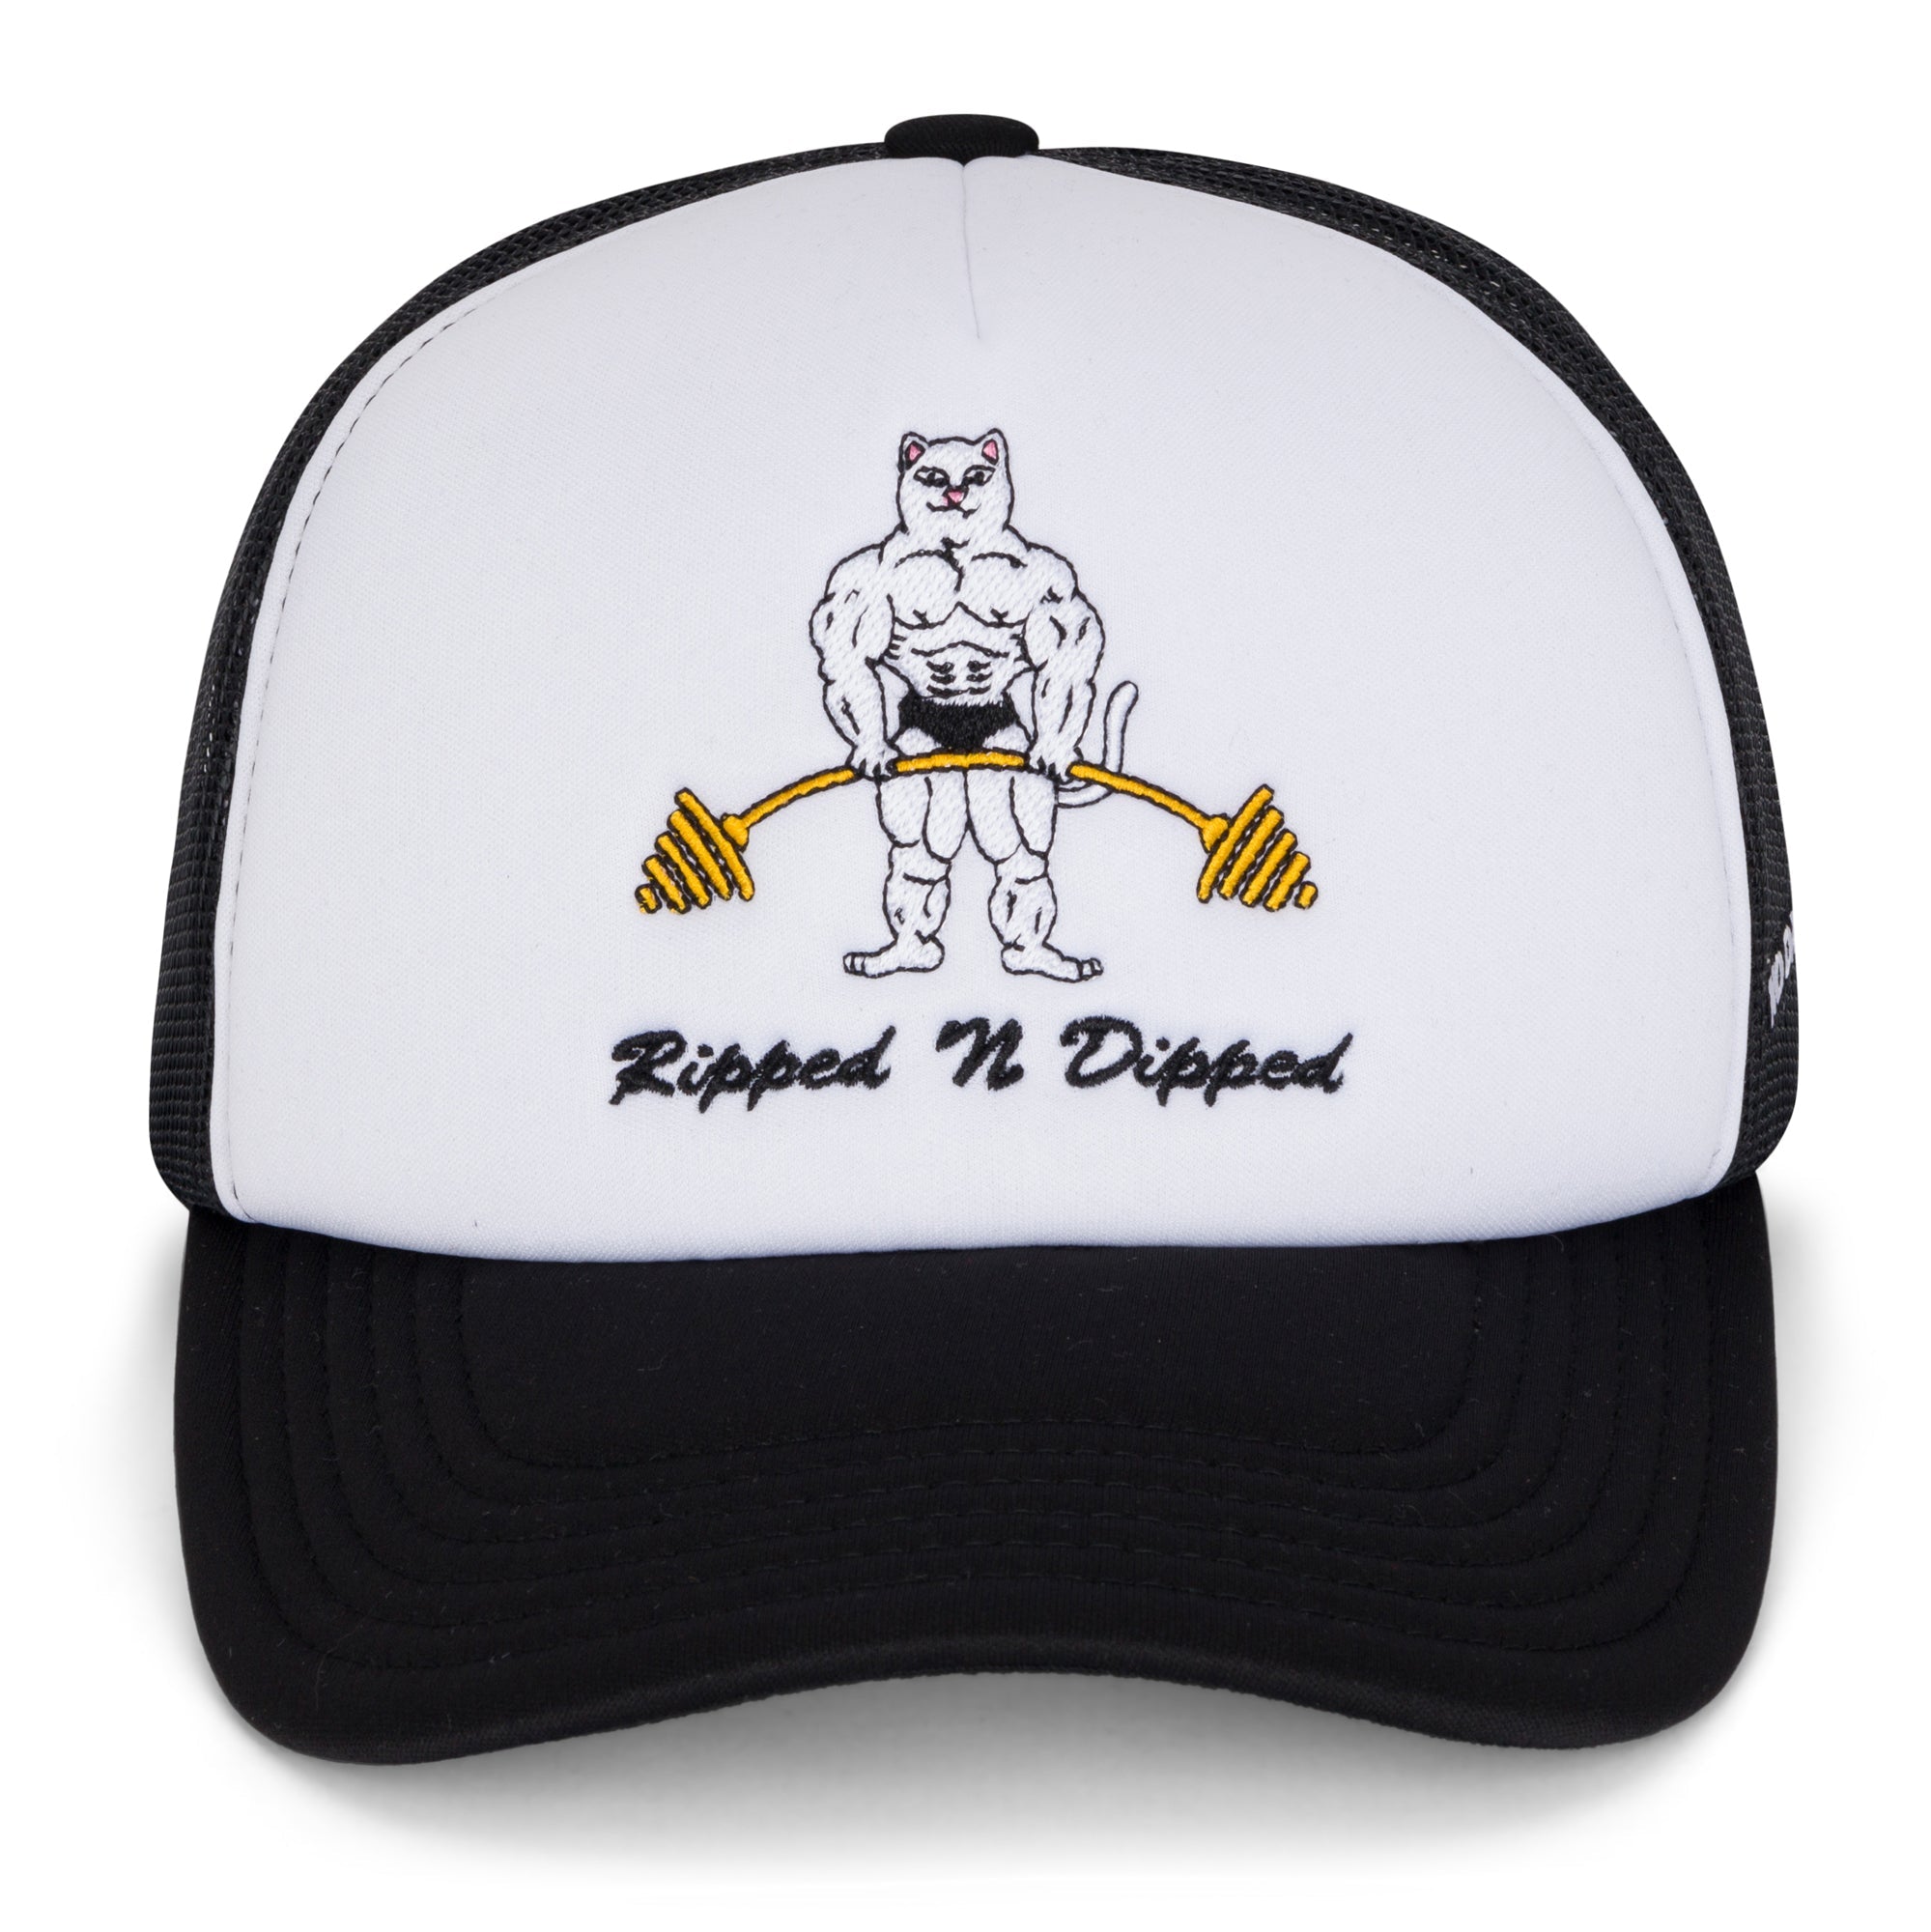 Ripped N Dipped Trucker Hat (Black)